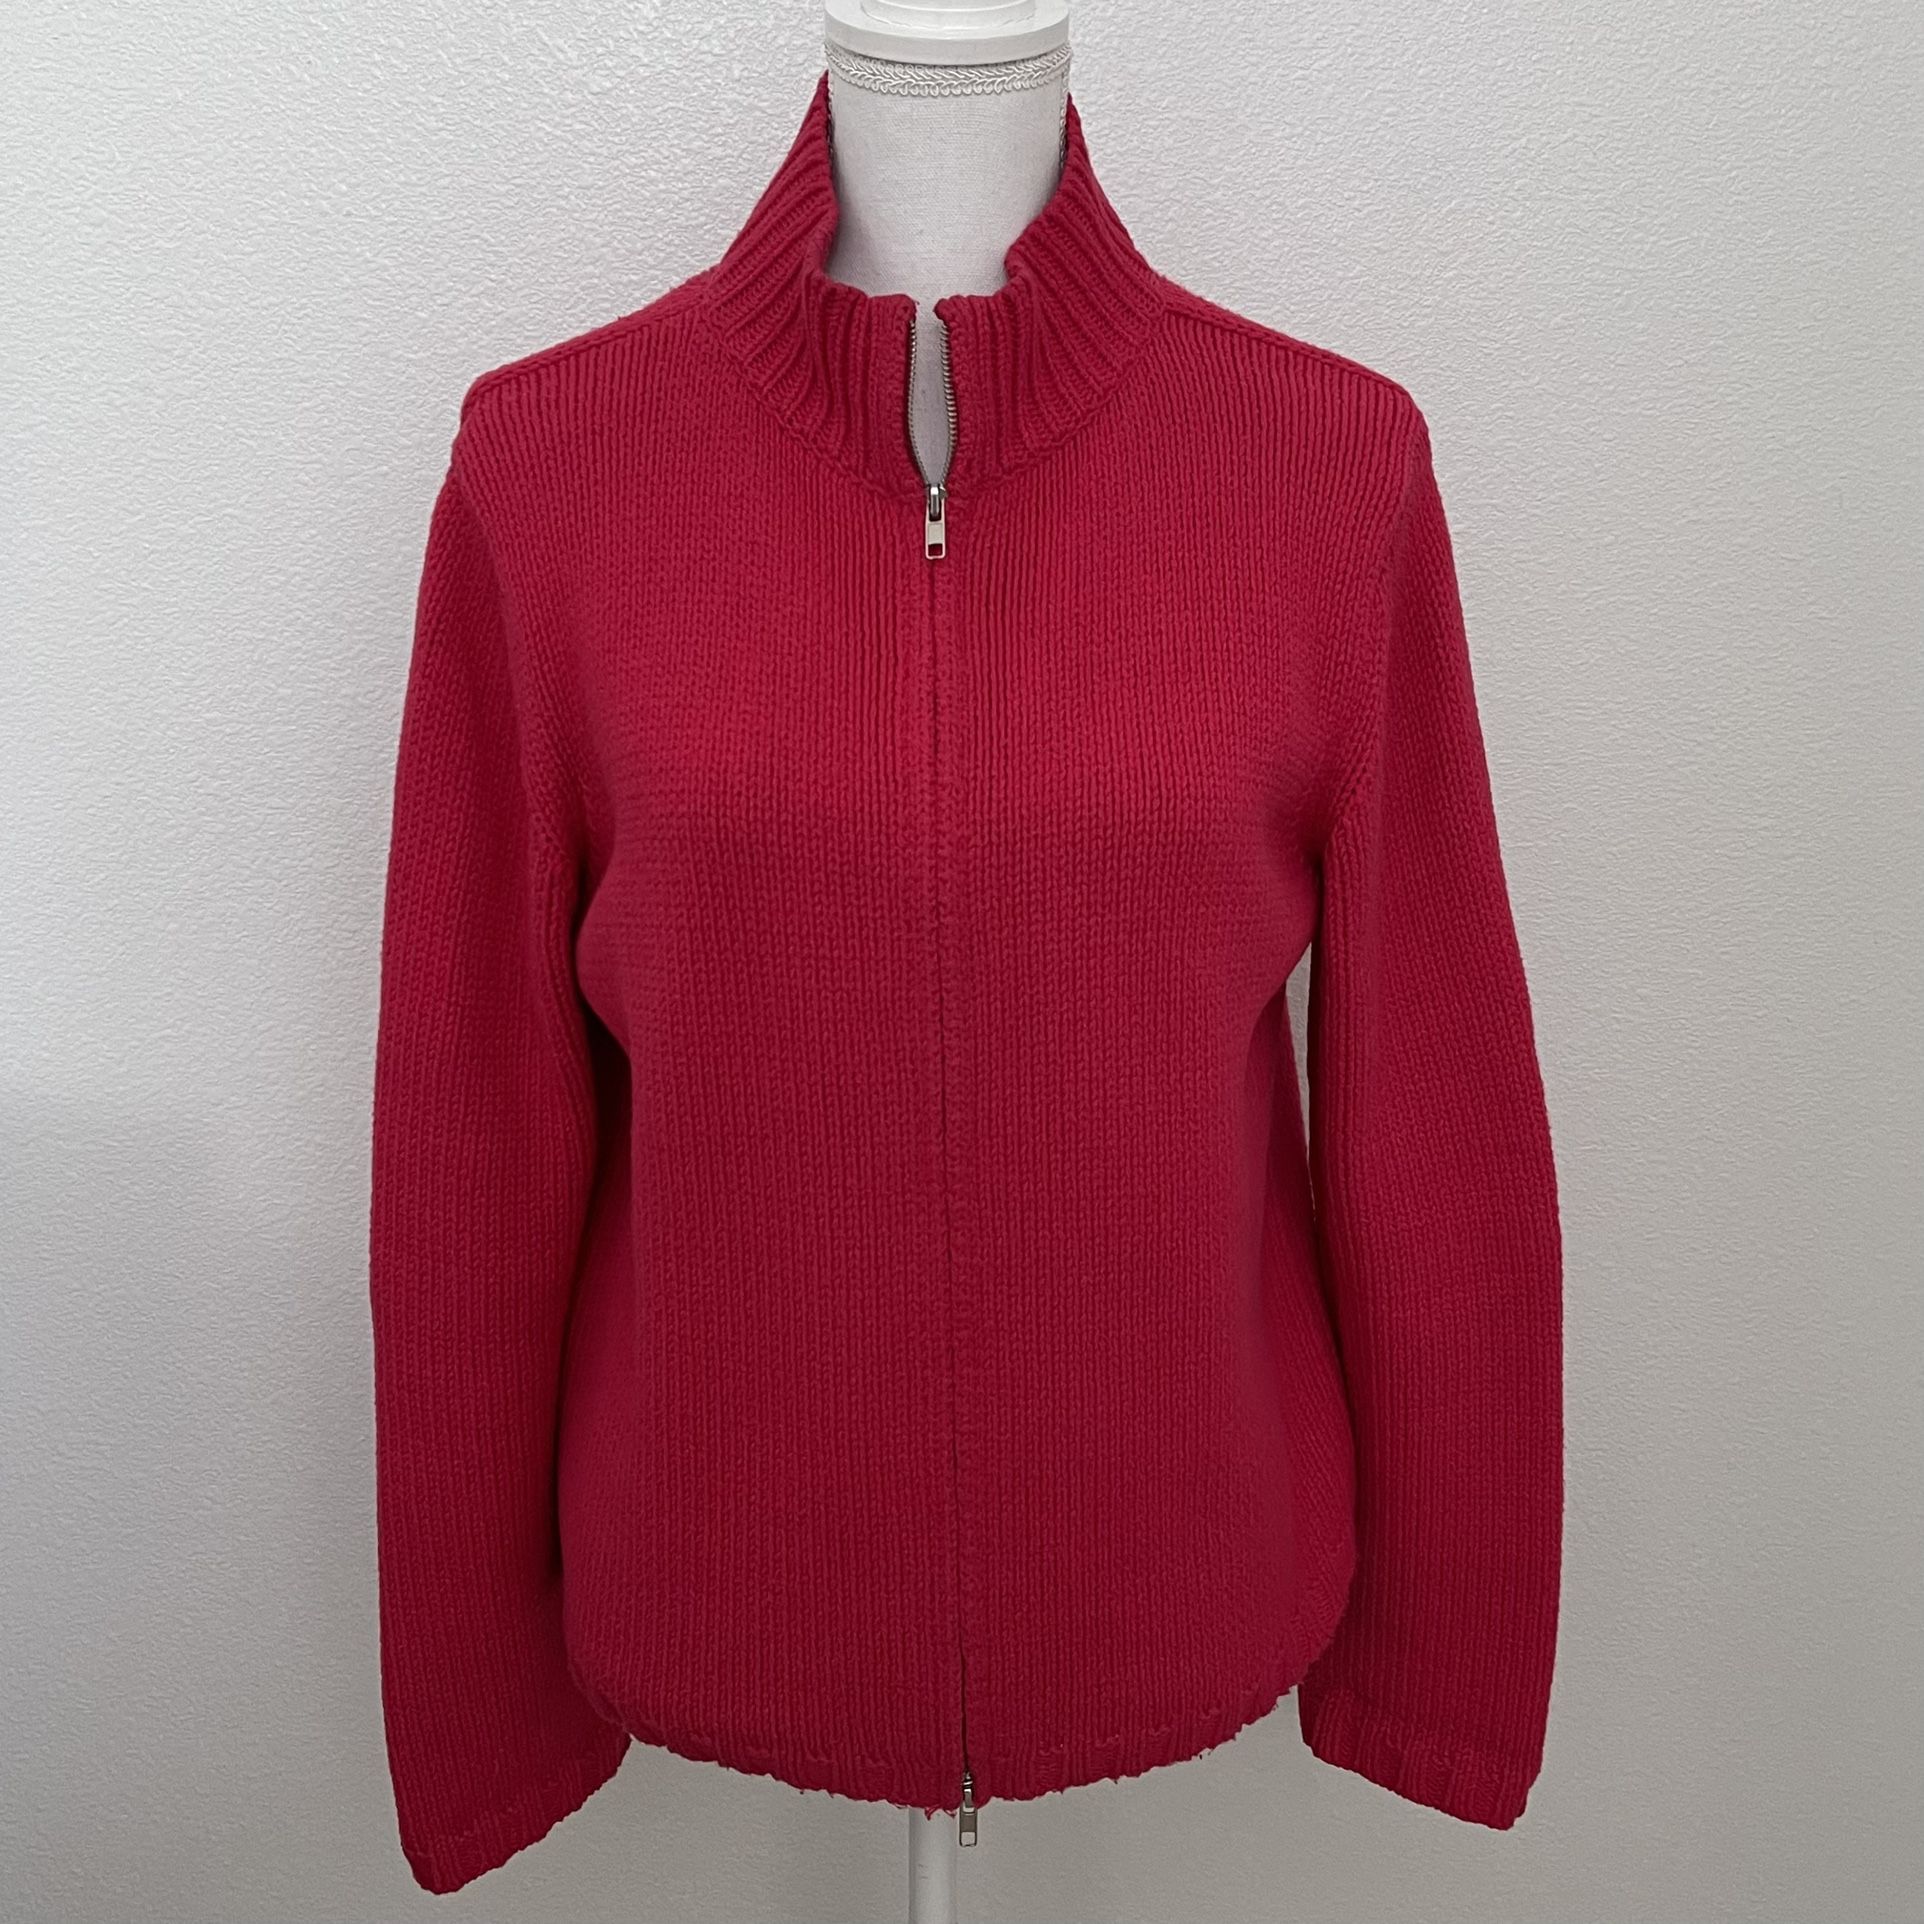 Express Zip-up Knit Sweater / Jacket, L